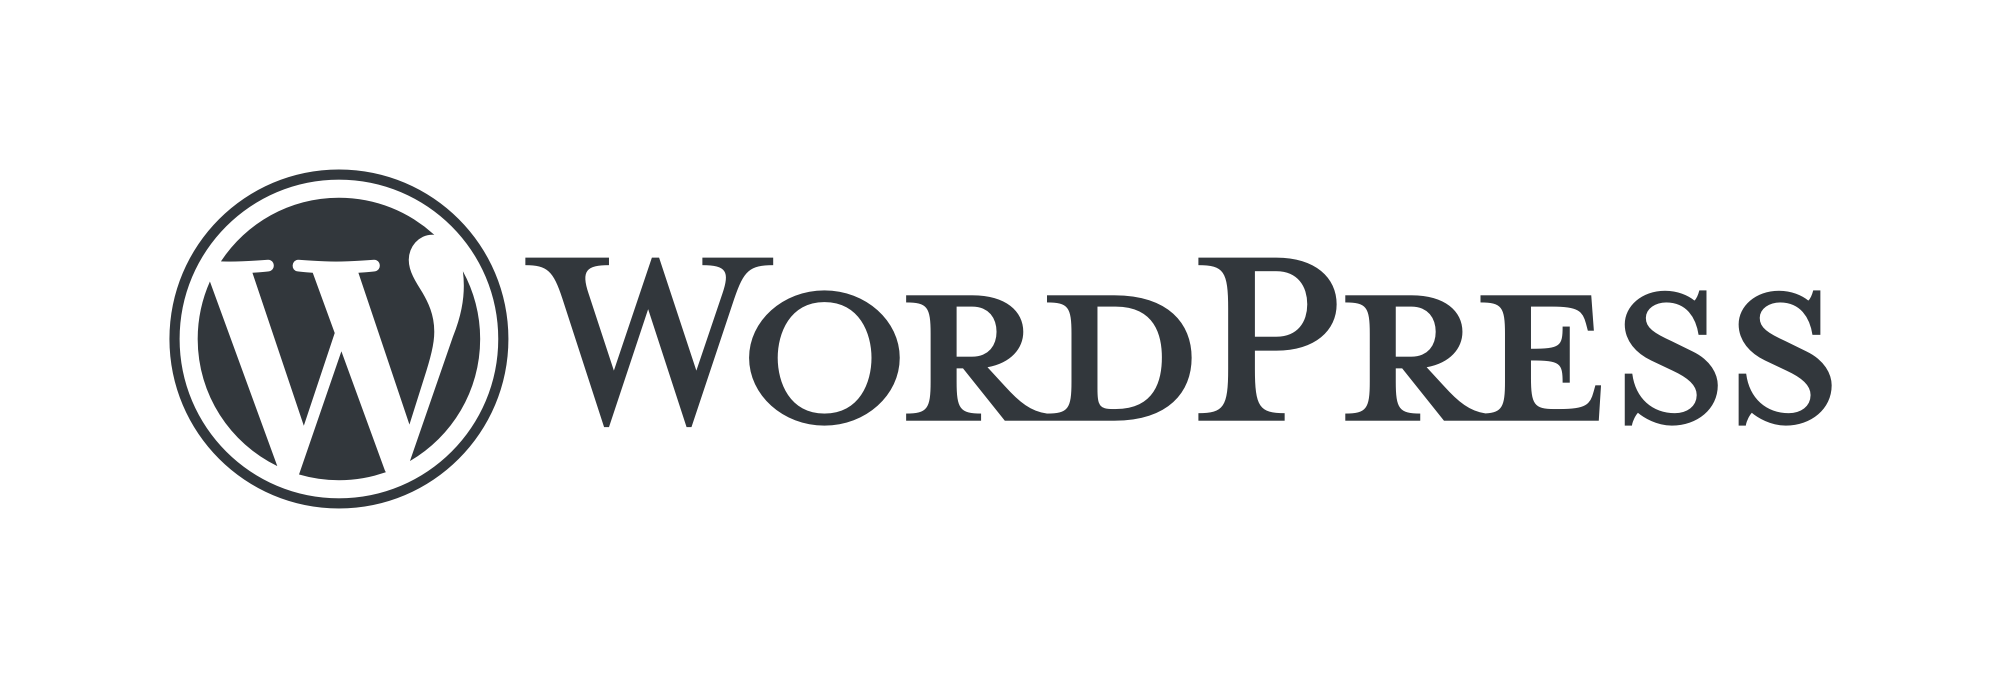 WordPress-Webniet-webistes